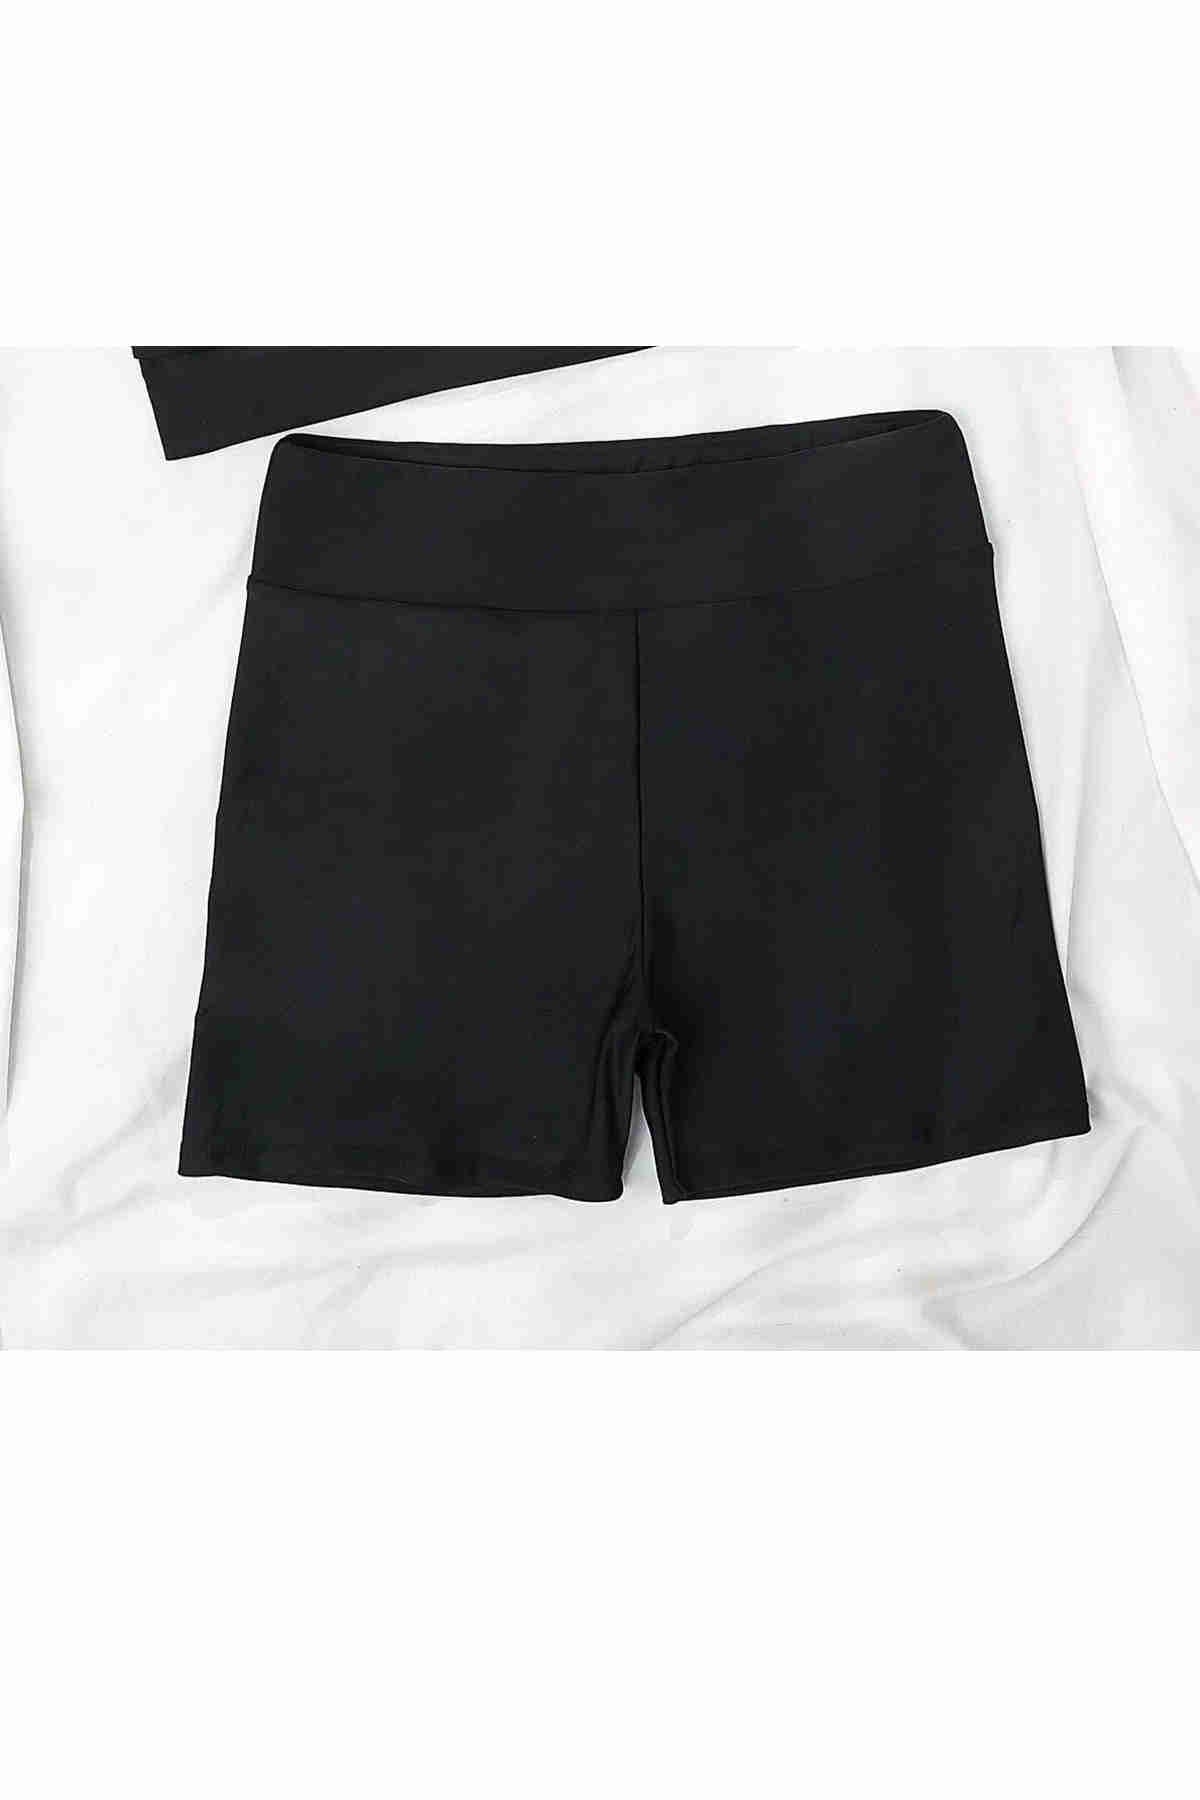 Stylish Marine shorts Black Piamoda